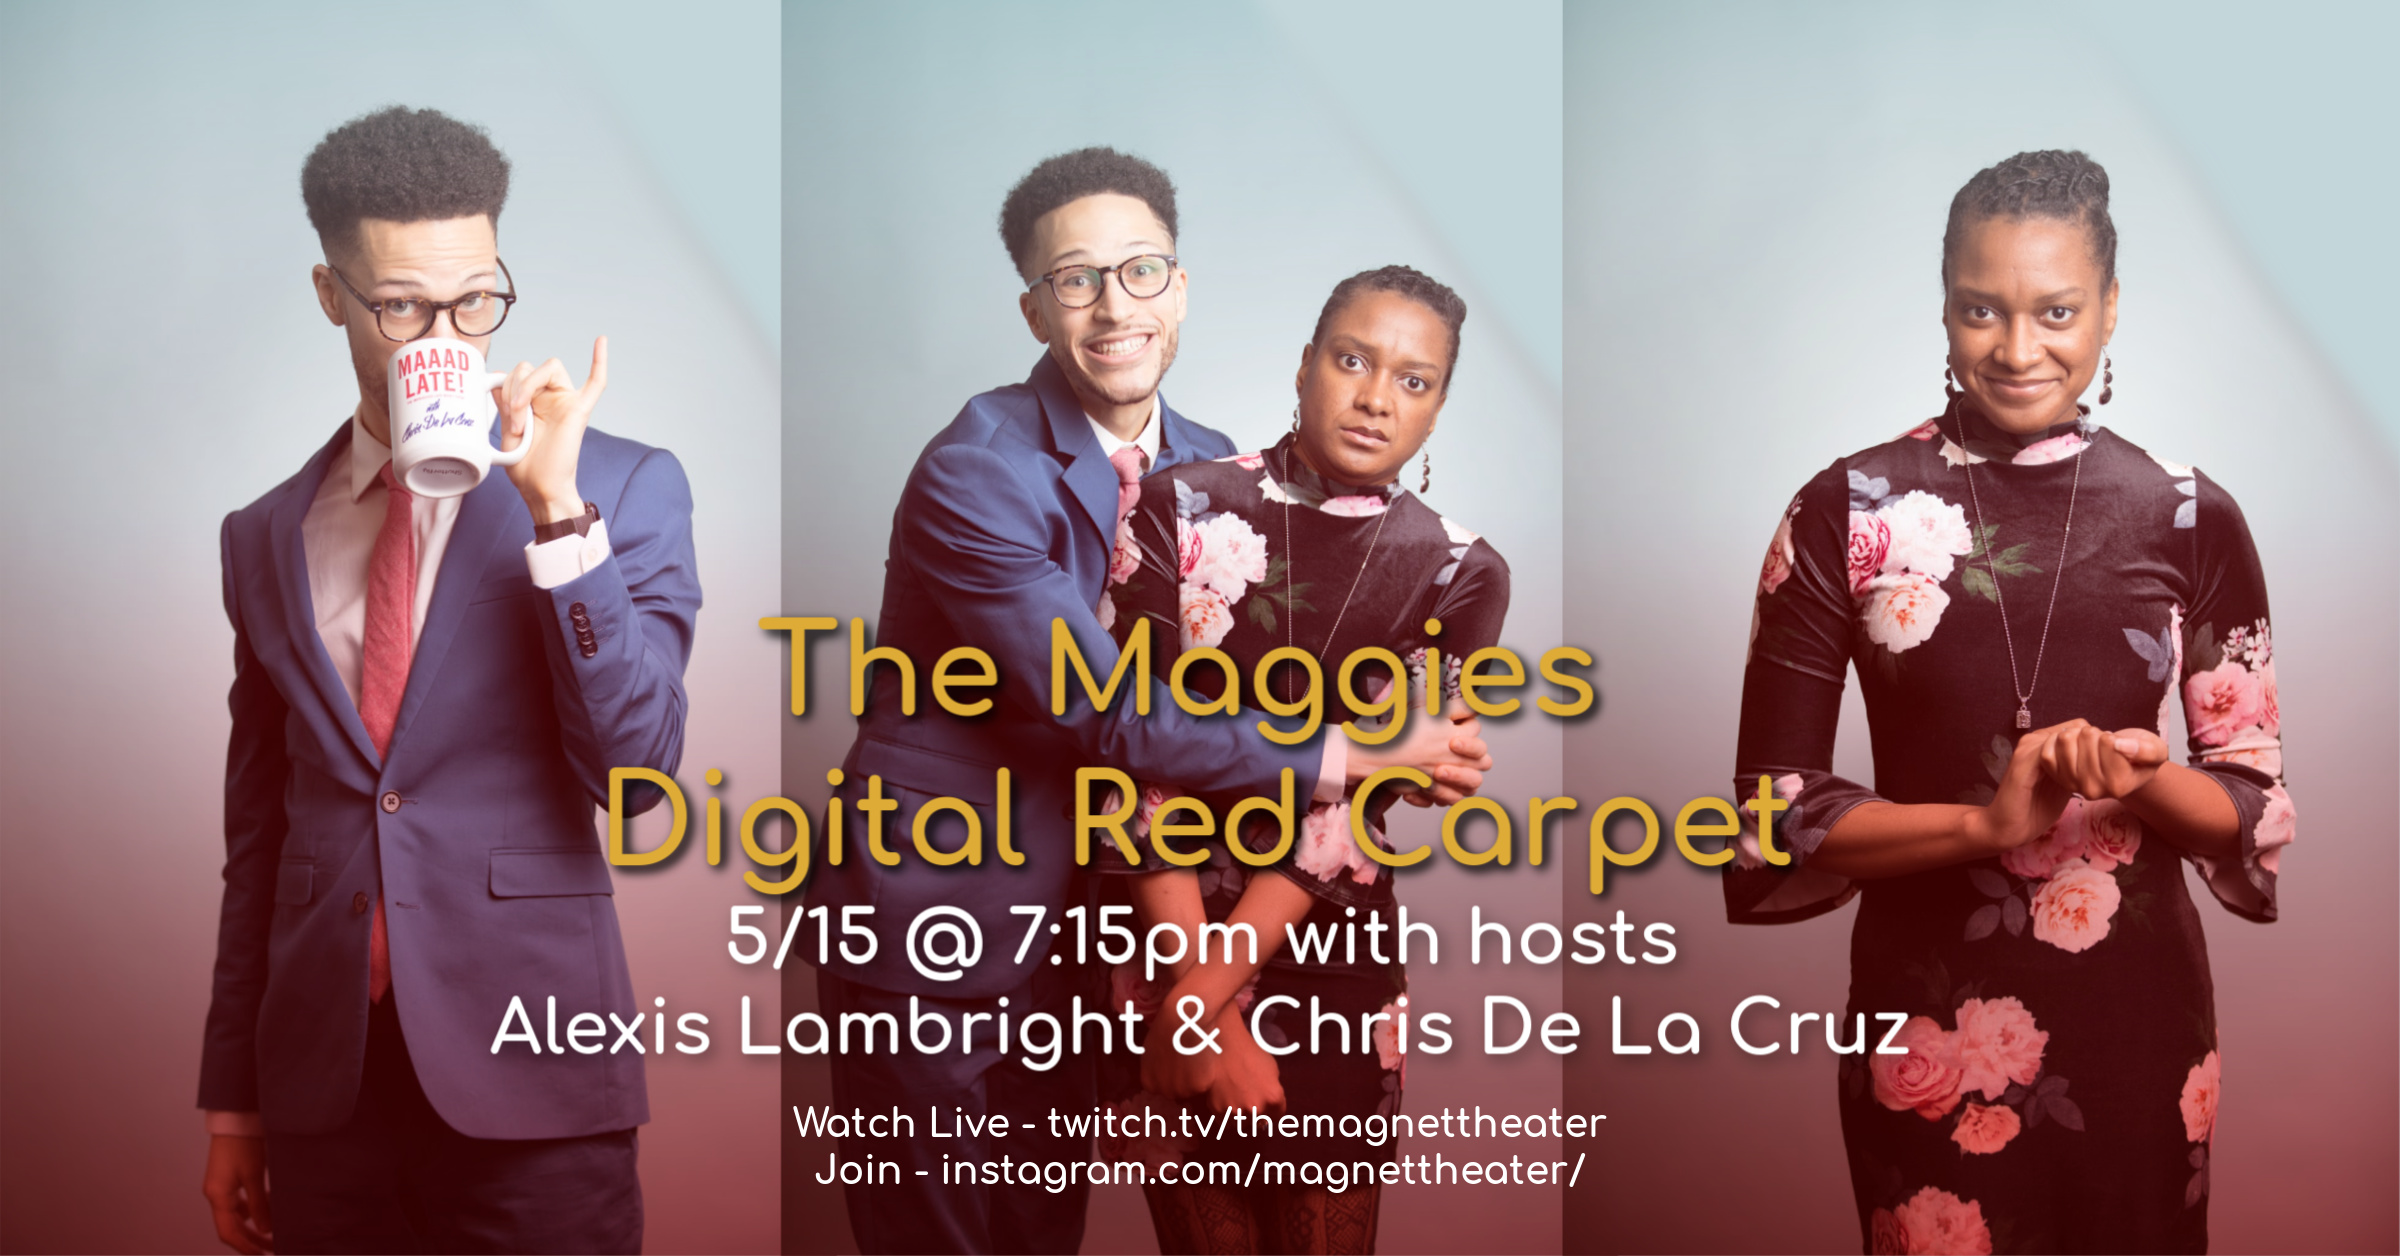 The Maggies Digital Red Carpet